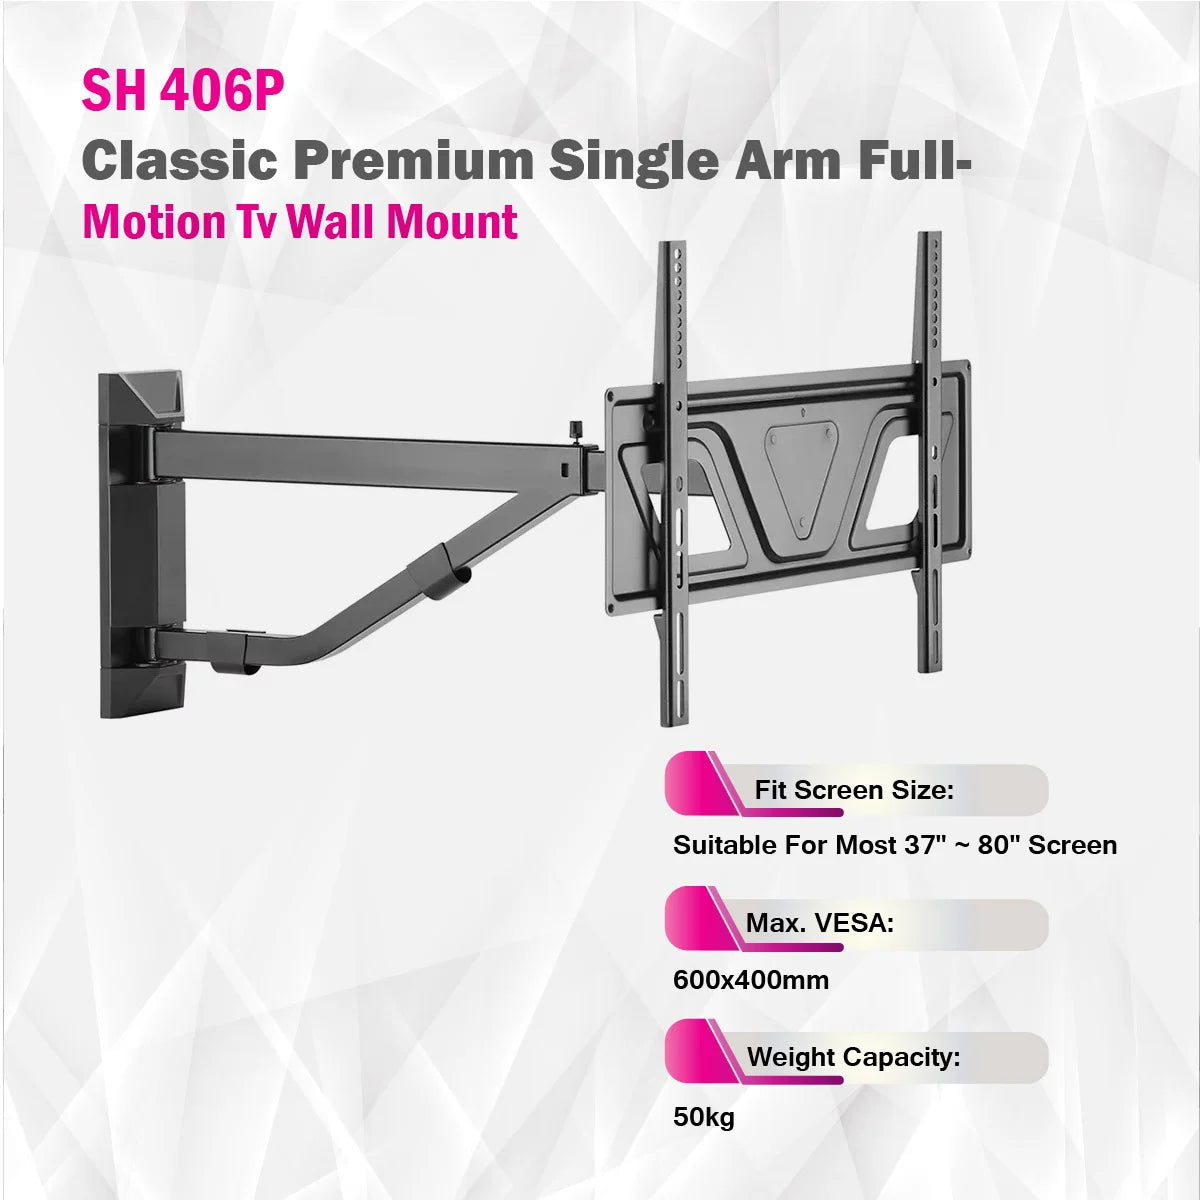 Skill Tech SH 406P - Classic Premium Single Arm Full-Motion Tv Wall Mount